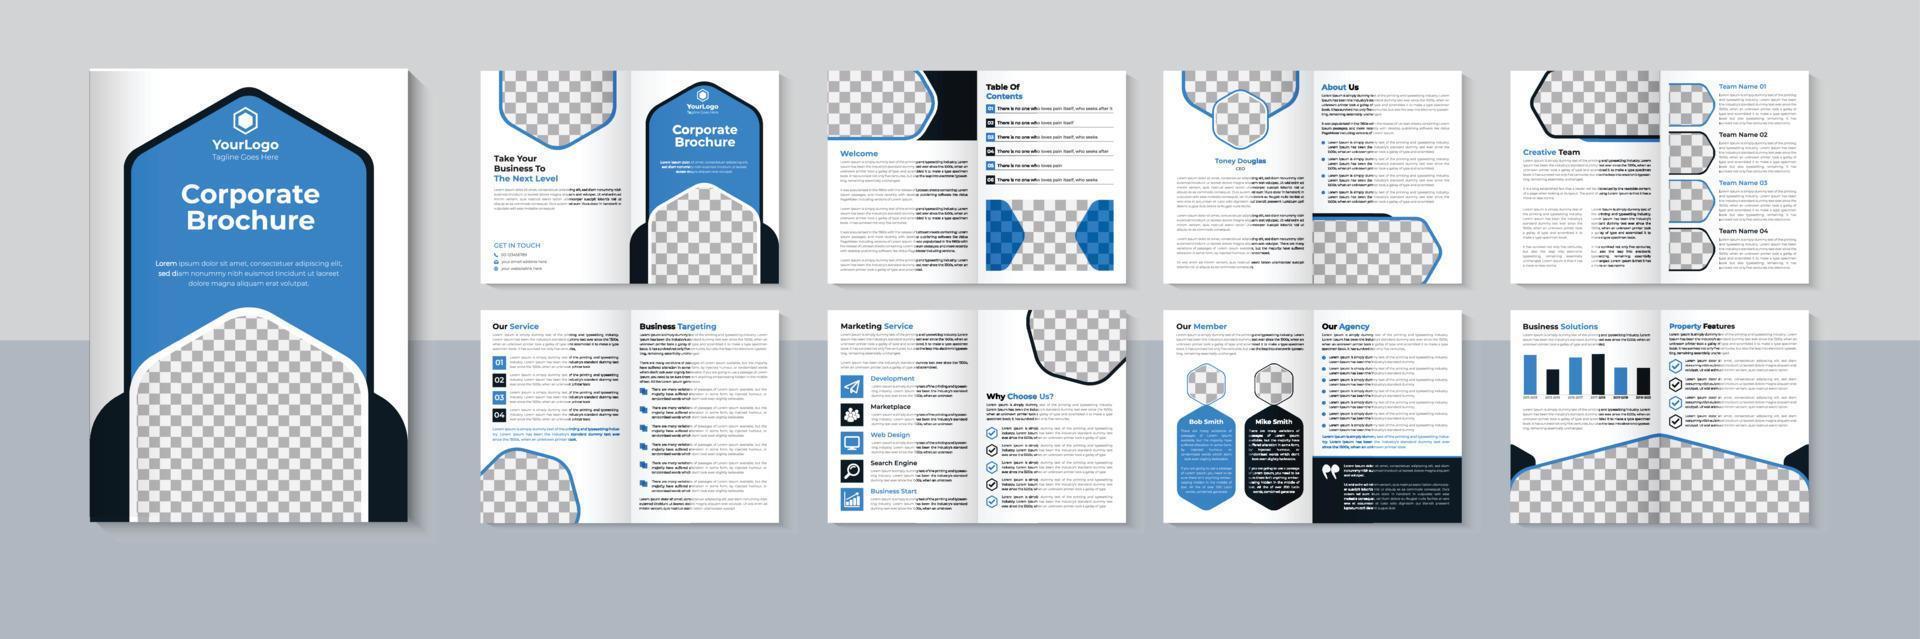 Corporate brochure design, Business 16 page brochure template, Blue color, Pro Vector